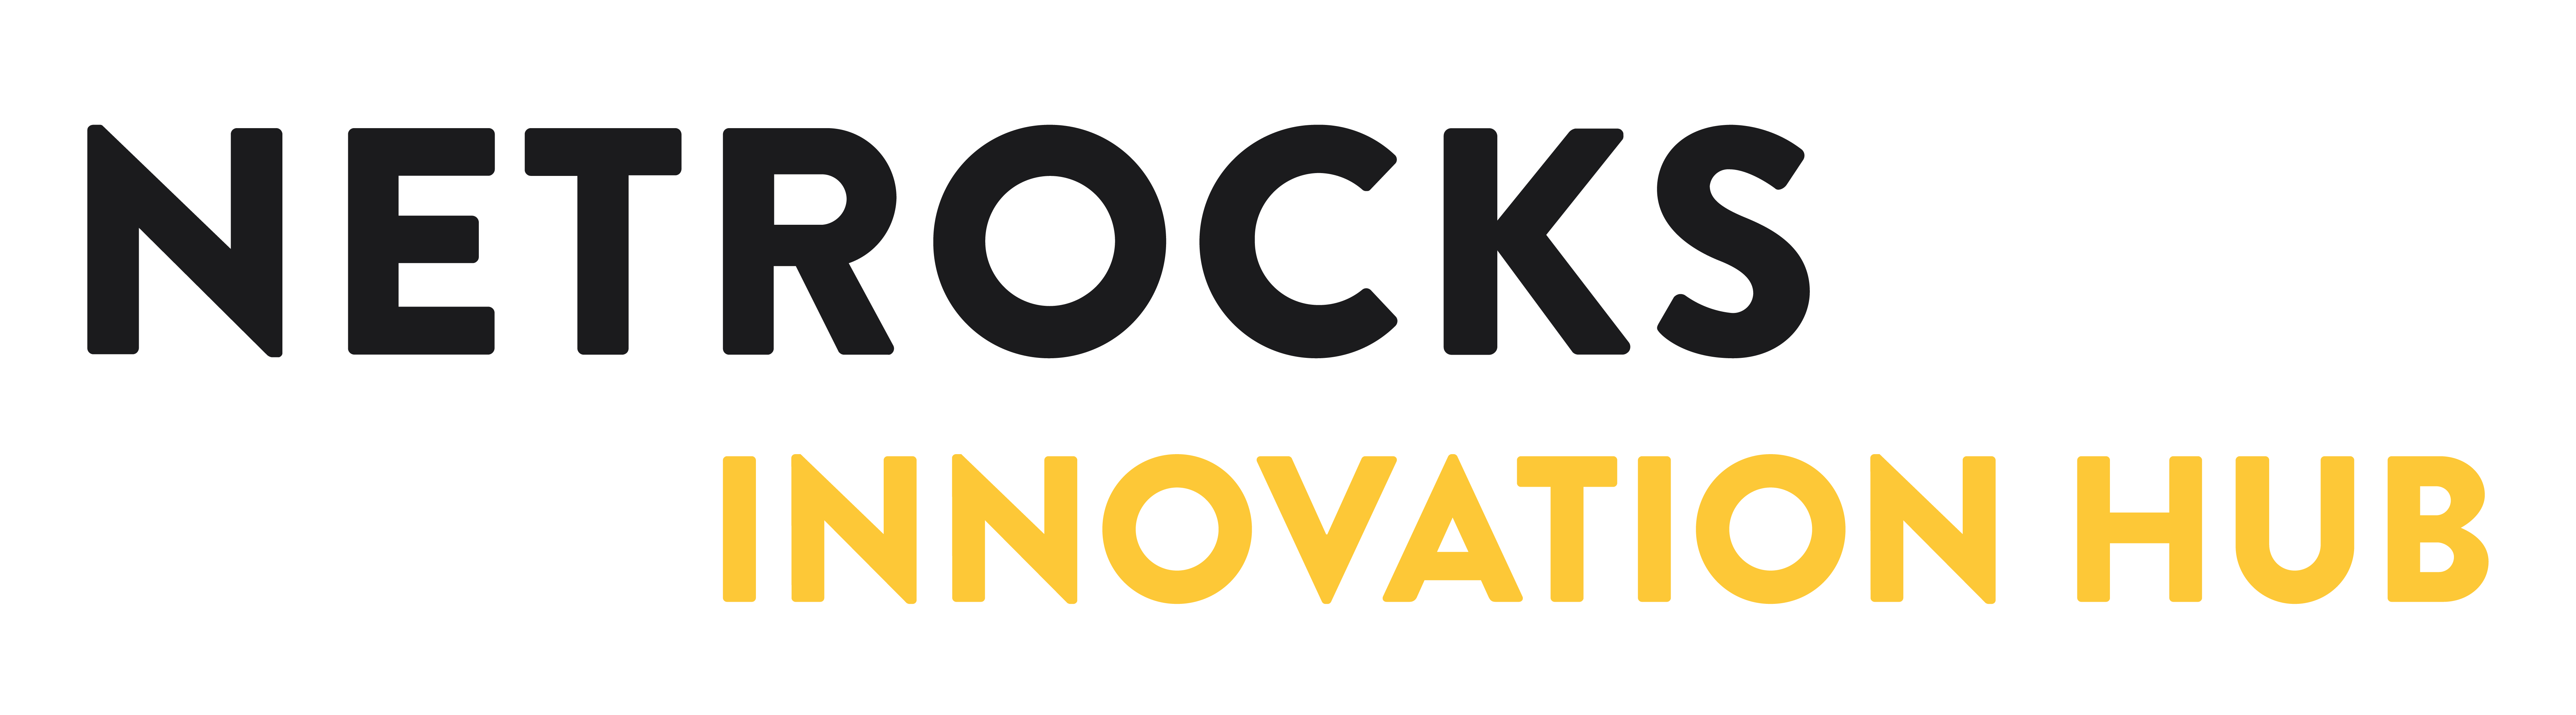 NetrocksInnovationHub_Logo_RGB_positiv-1